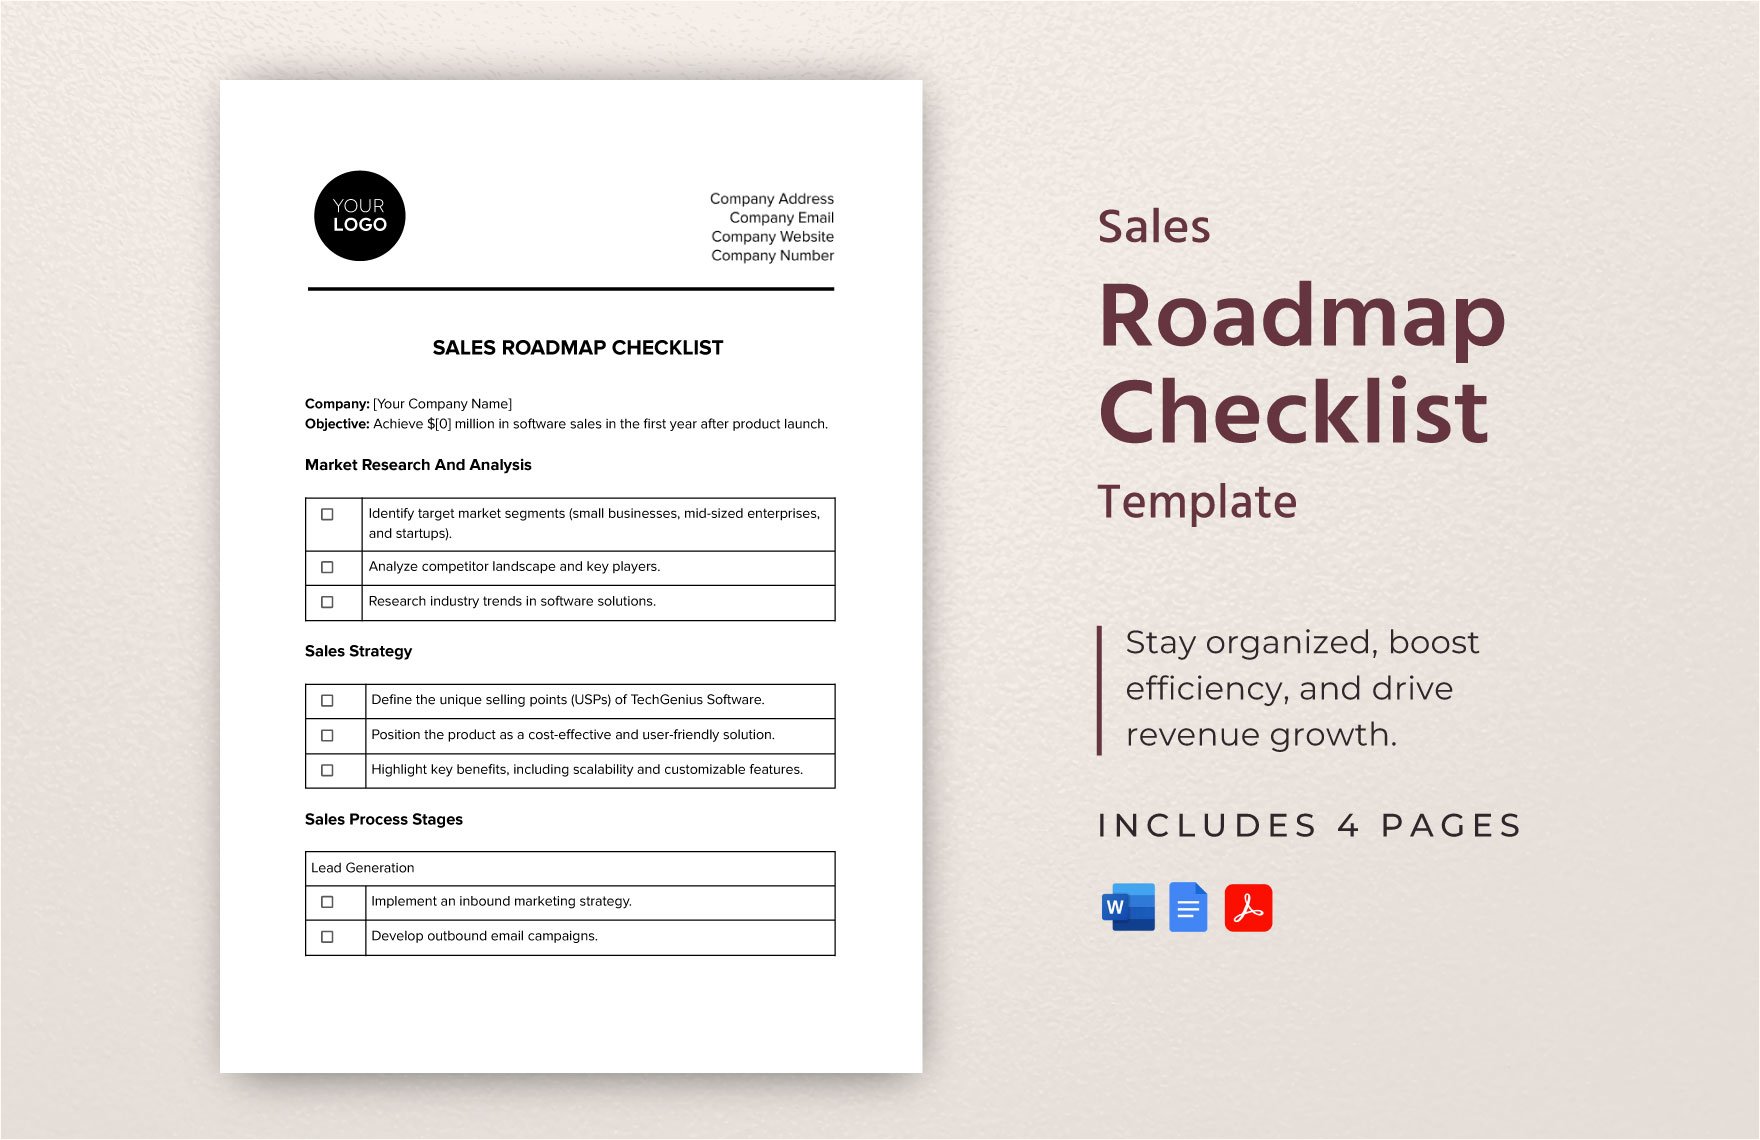 Sales Roadmap Checklist Template